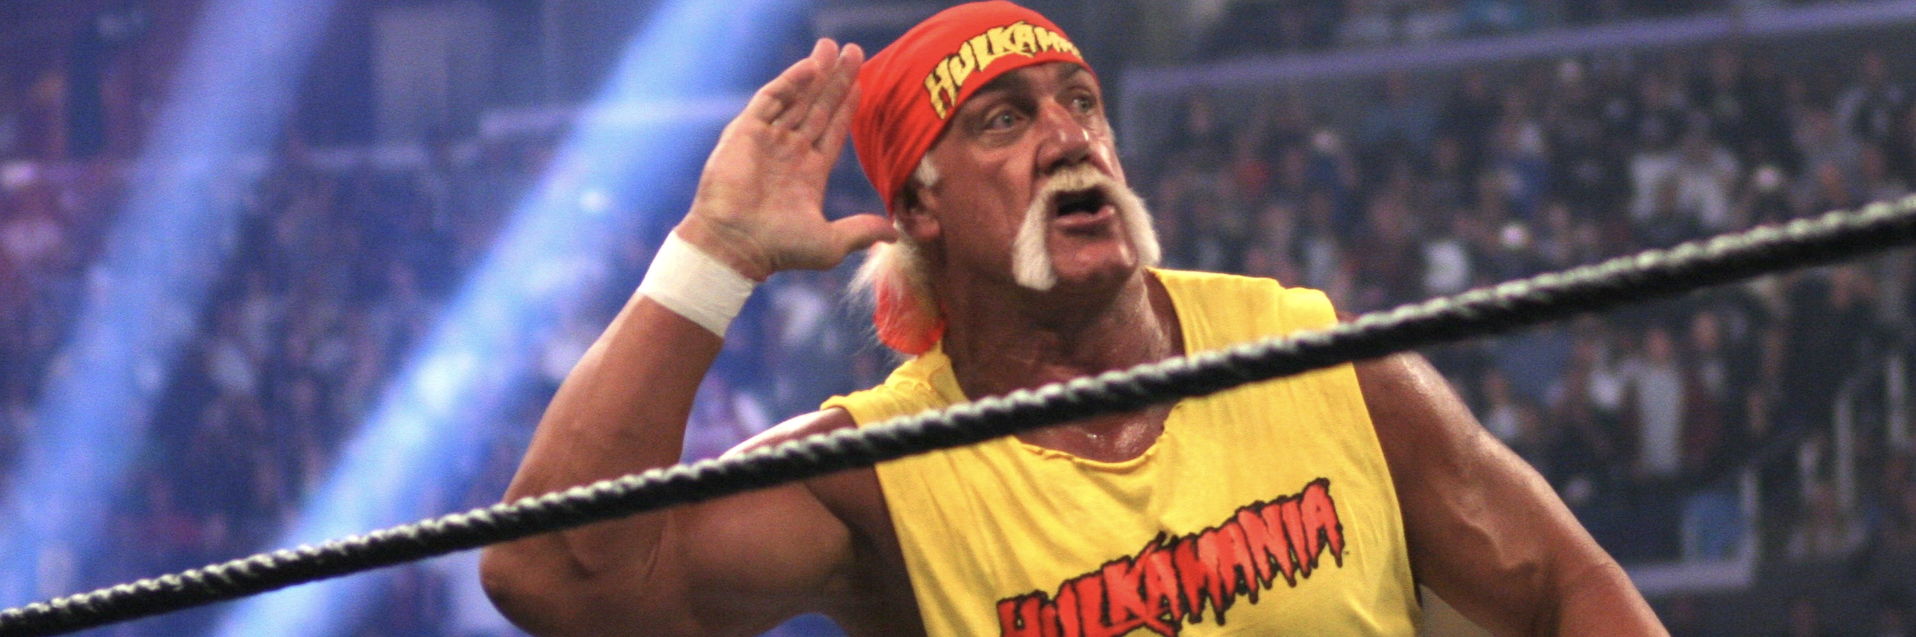 Hulk Hogan: 35 Years of Unlikely Icon -